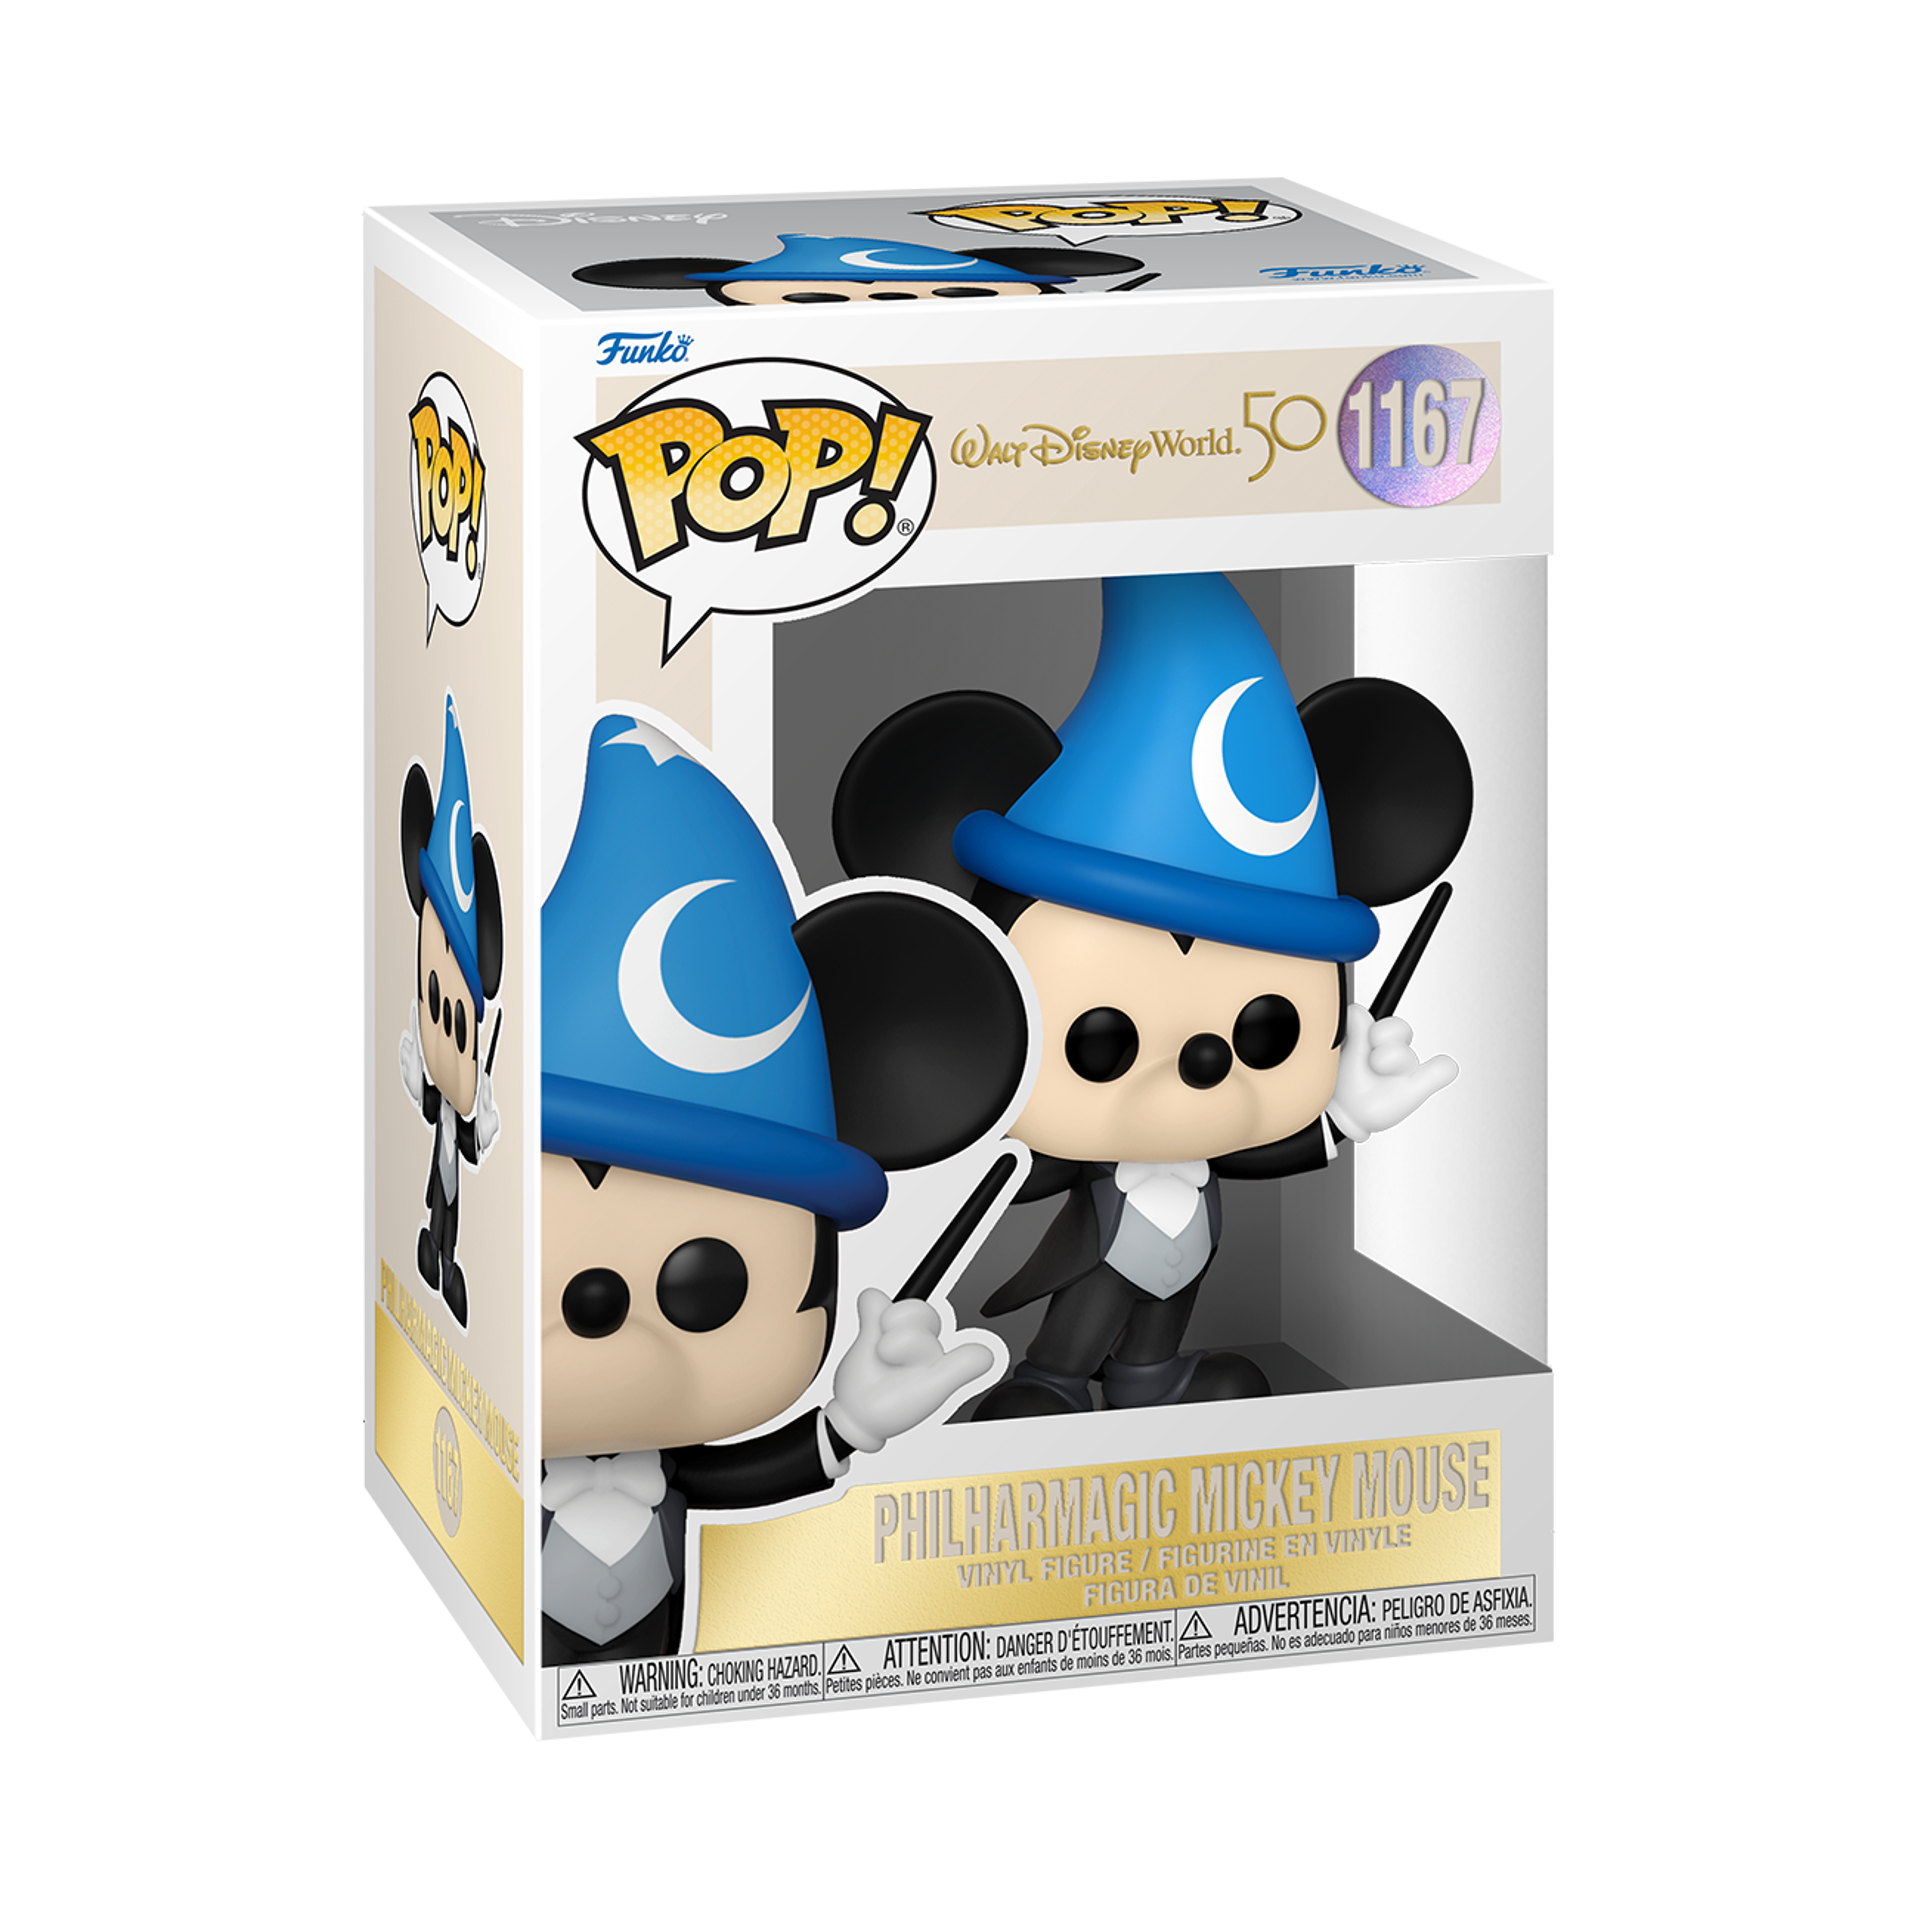 Funko Pop! Disney: Walt Disney World 50th Anniversary - Philharmagic Mickey Mouse